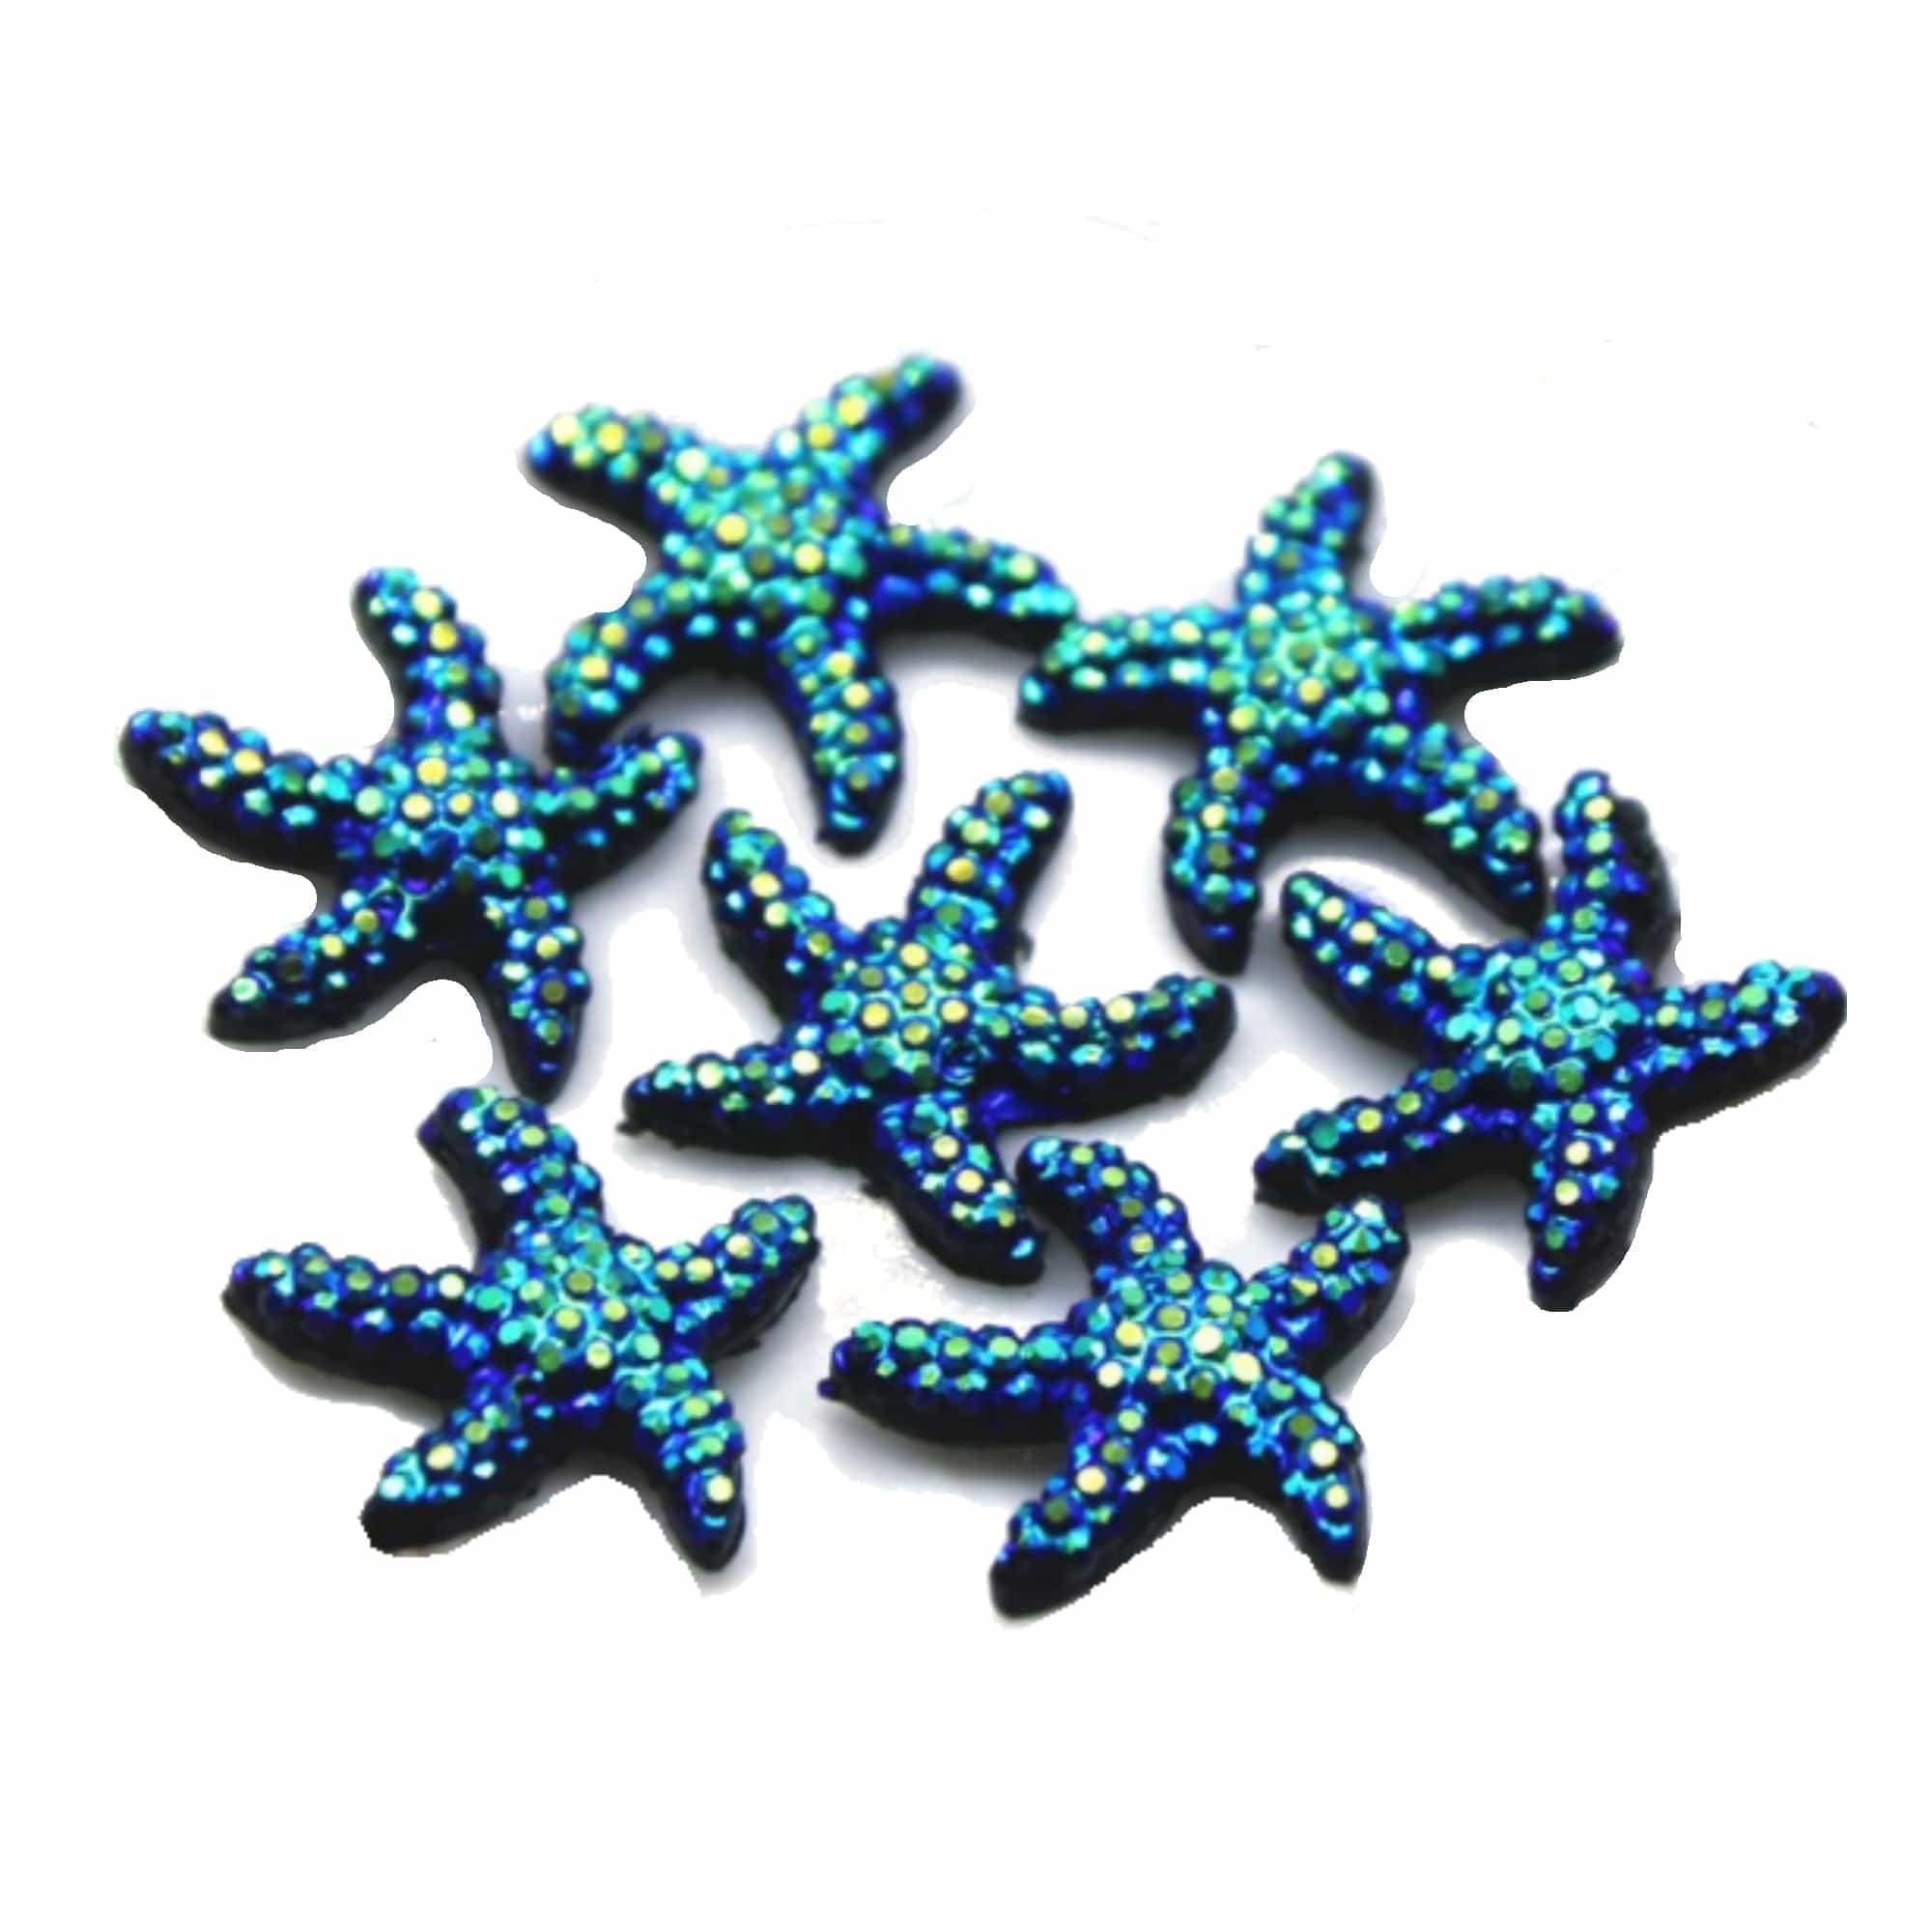 Peacock Blue Sea Stars Resin Flatback Scrapbook Embellishments by SSC Designs - 10 pieces